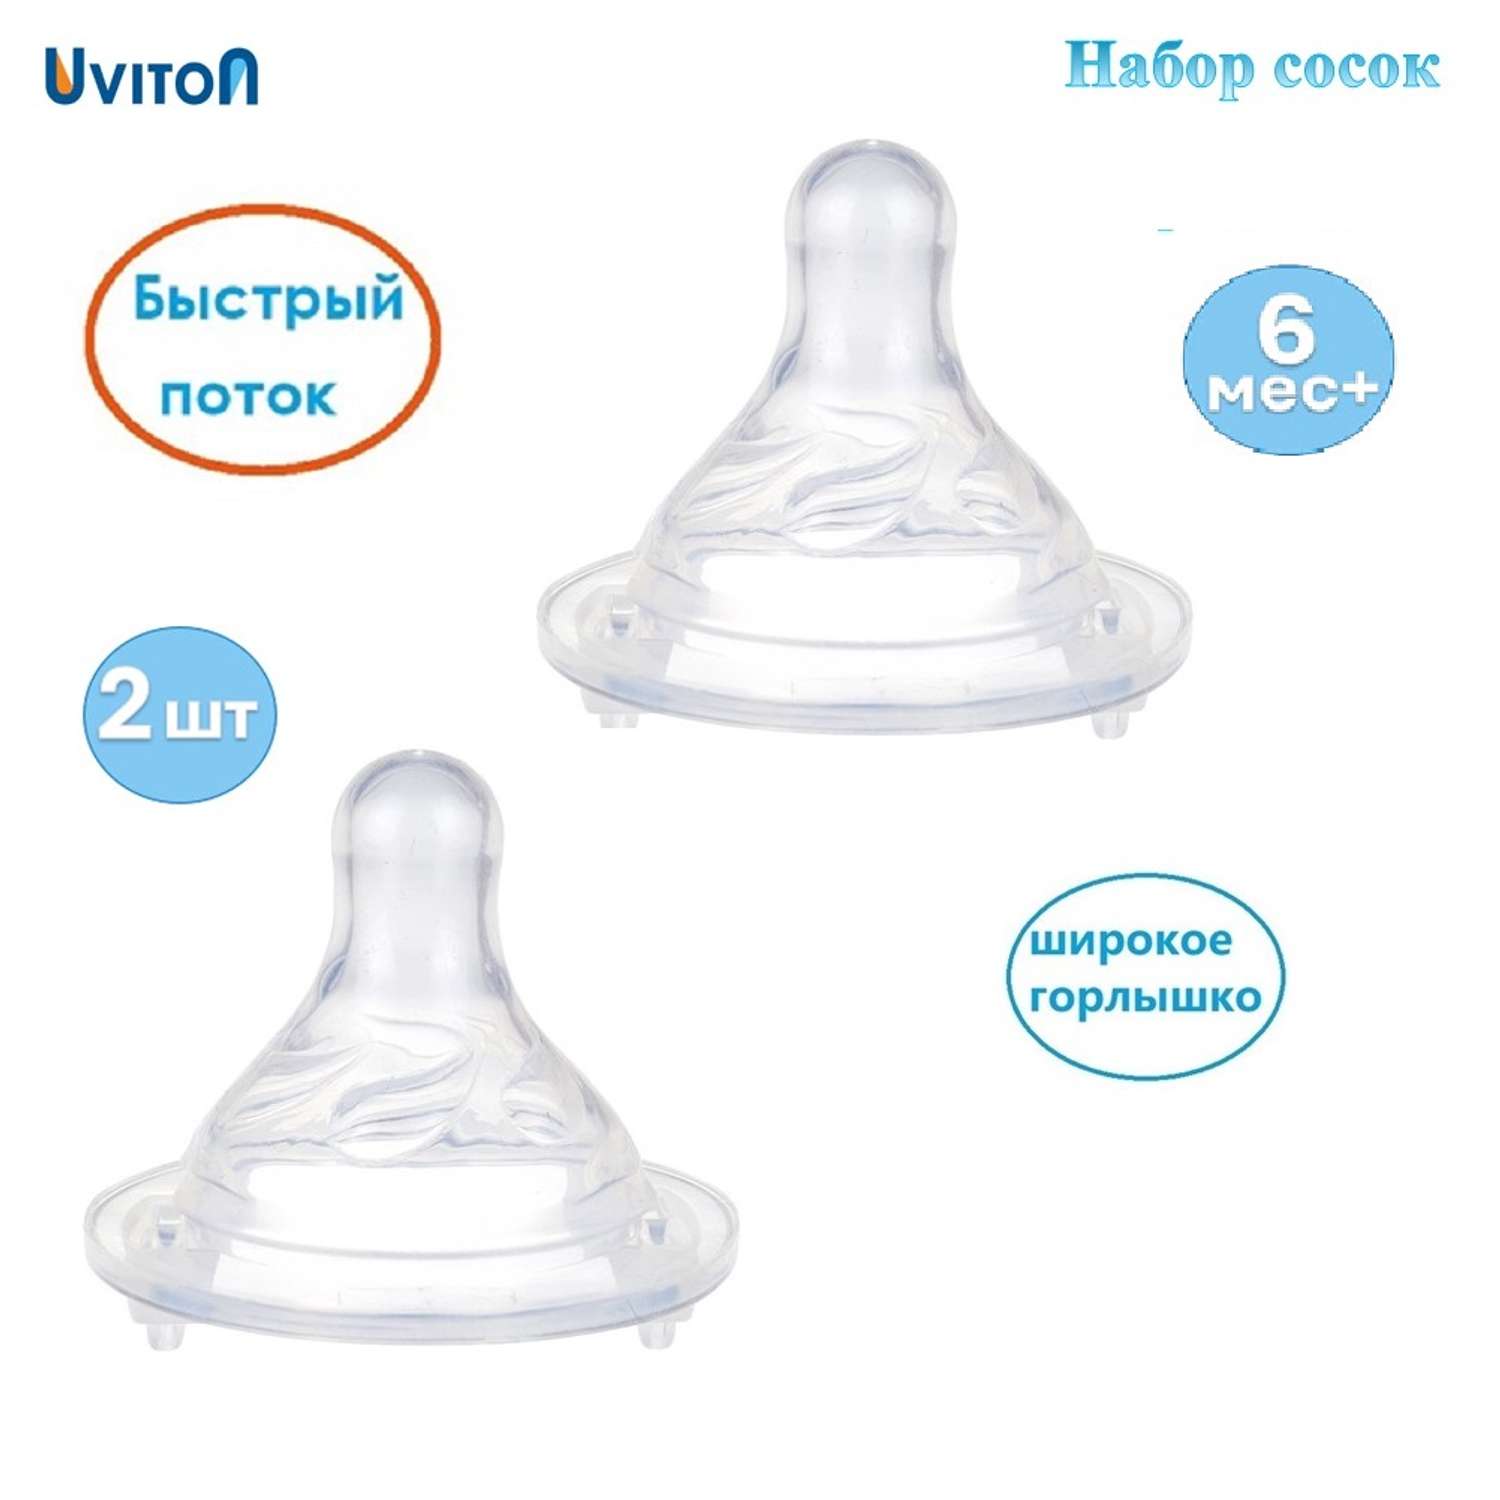 Соски Uviton для бутылочек с широким горлышком быстрый поток 2 шт - фото 1